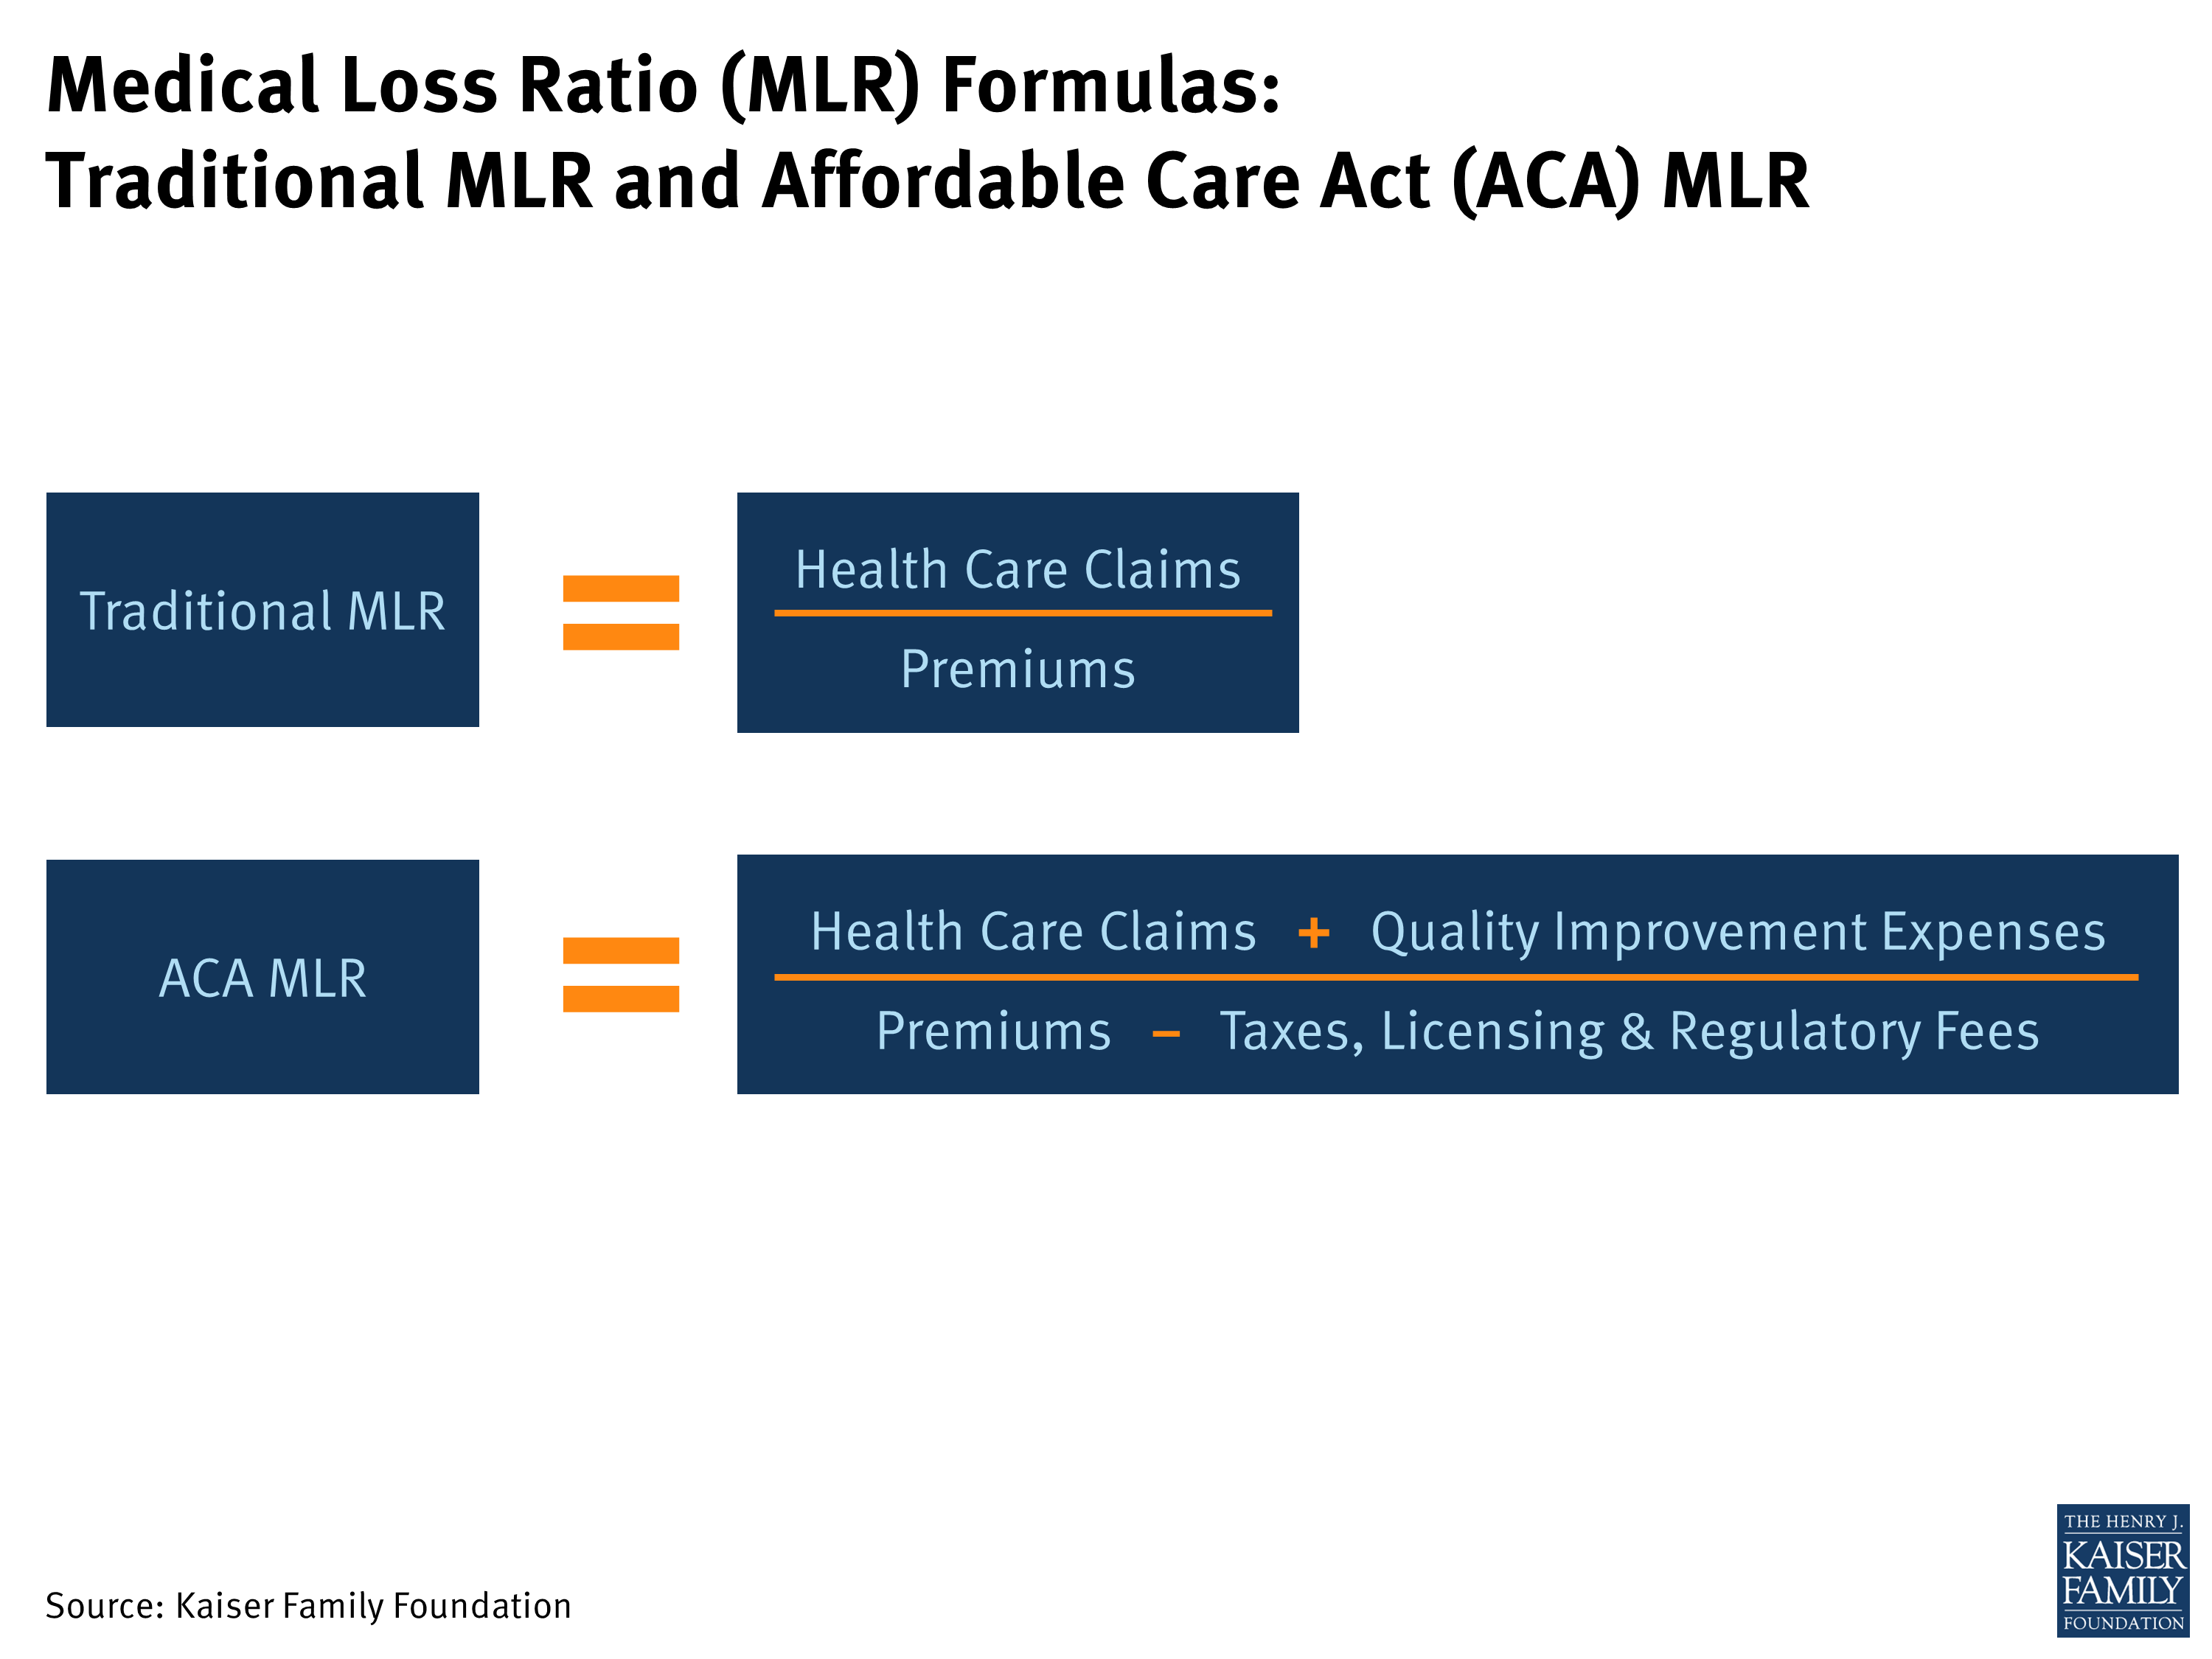 Affordable Care Act Medical Loss Ratio Rebate